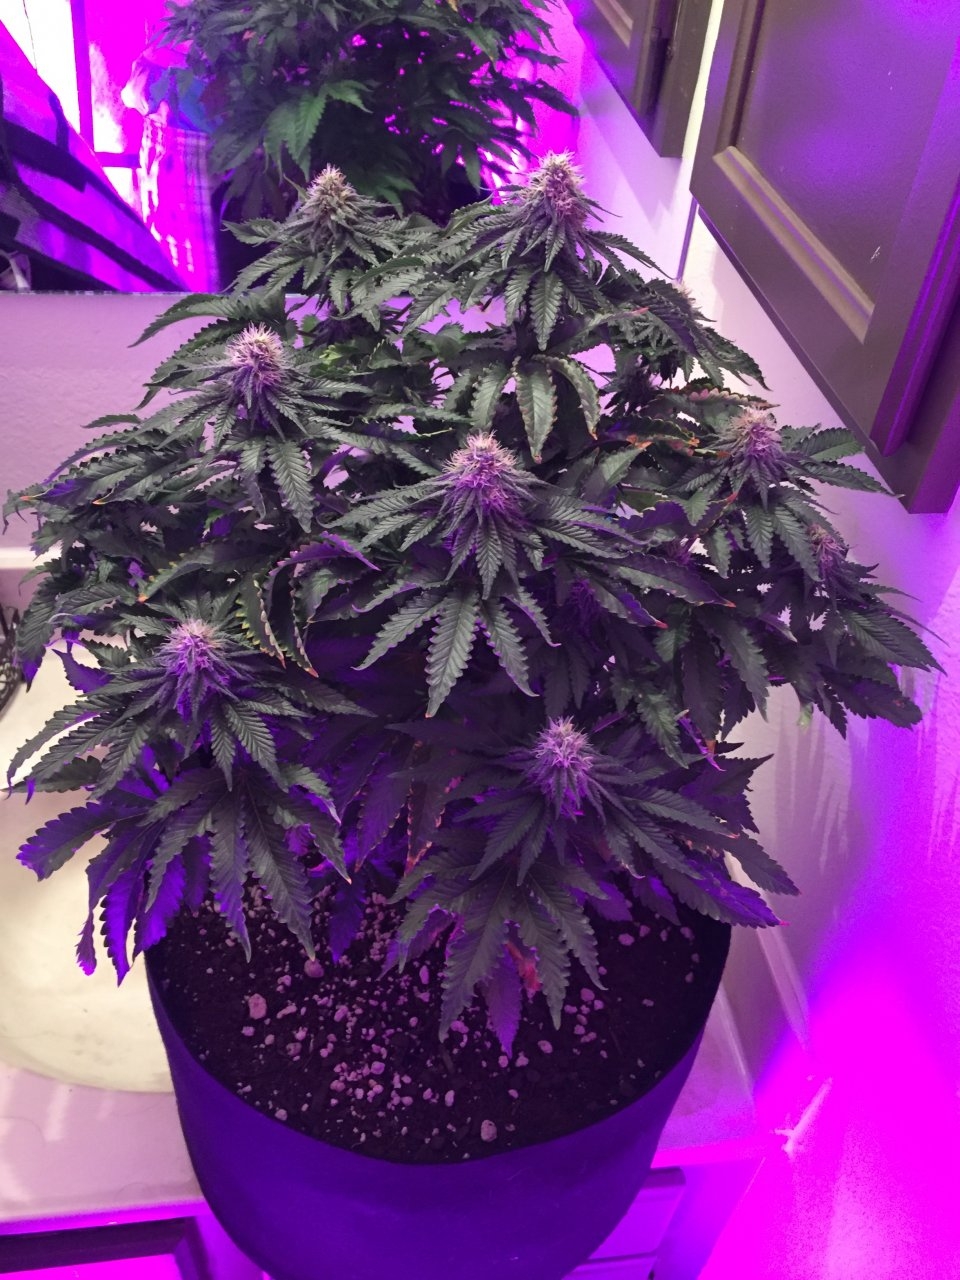 Plant 2 Week 6 with KindSoil